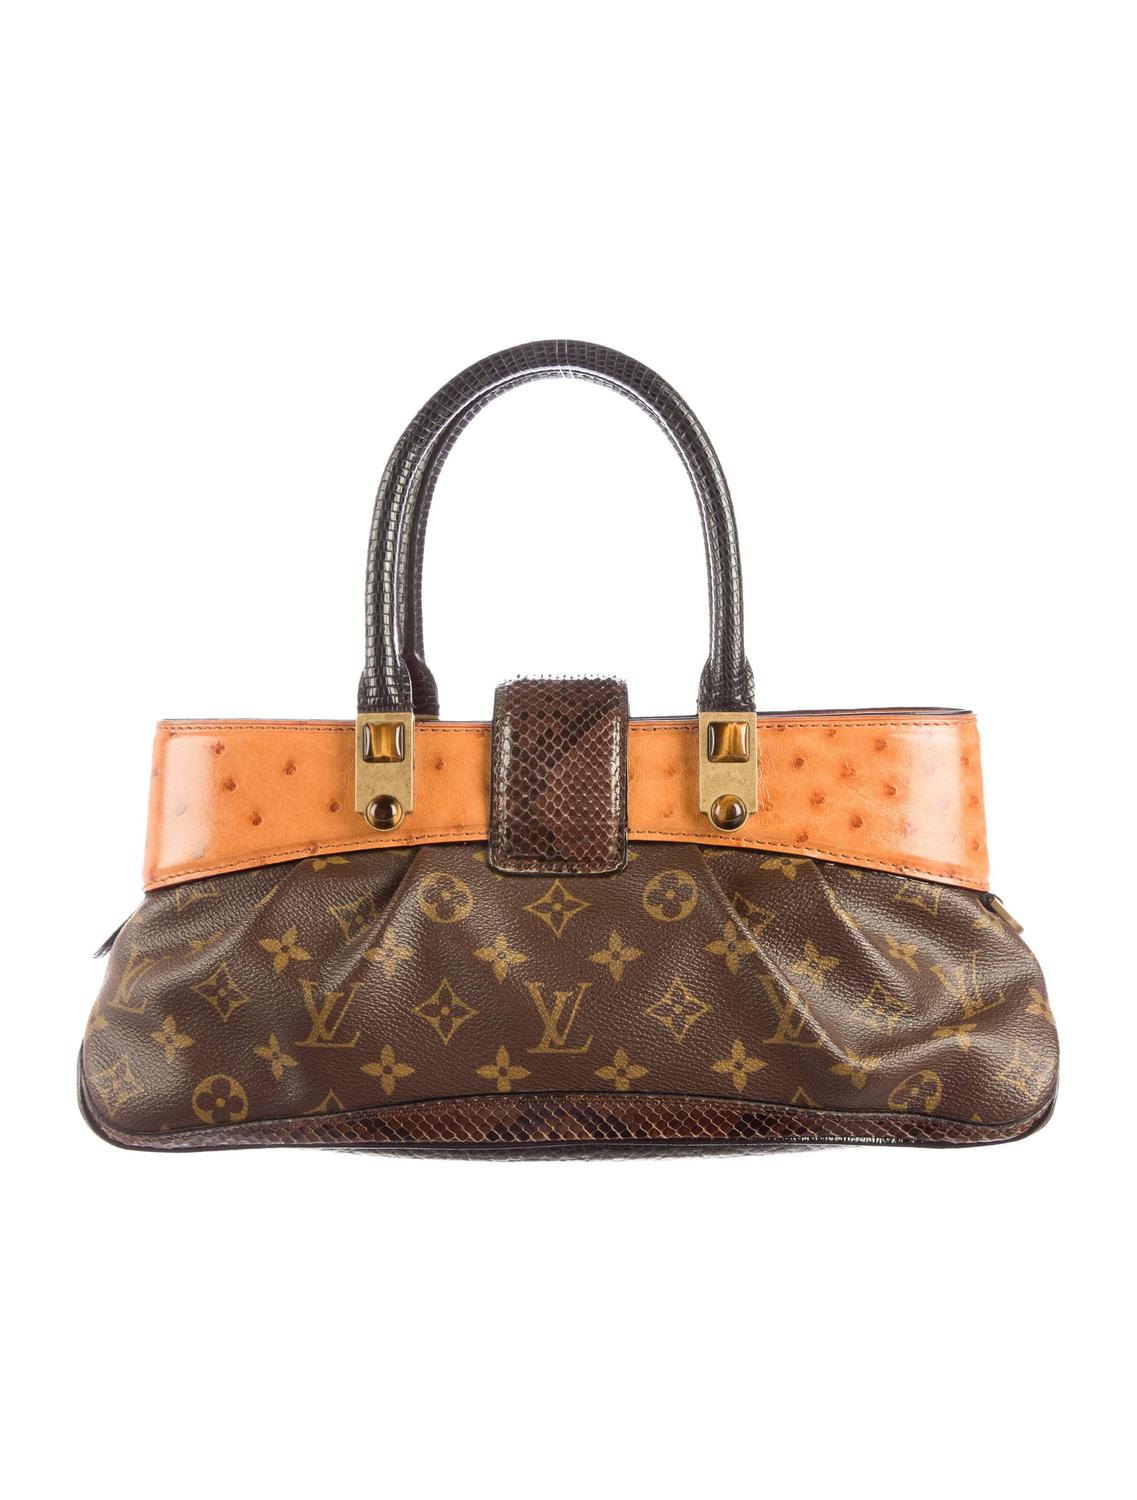 Louis Vuitton Rare Ltd Edition Cognac Snakeskin Stone Top Handle Satchel Bag For Sale at 1stdibs